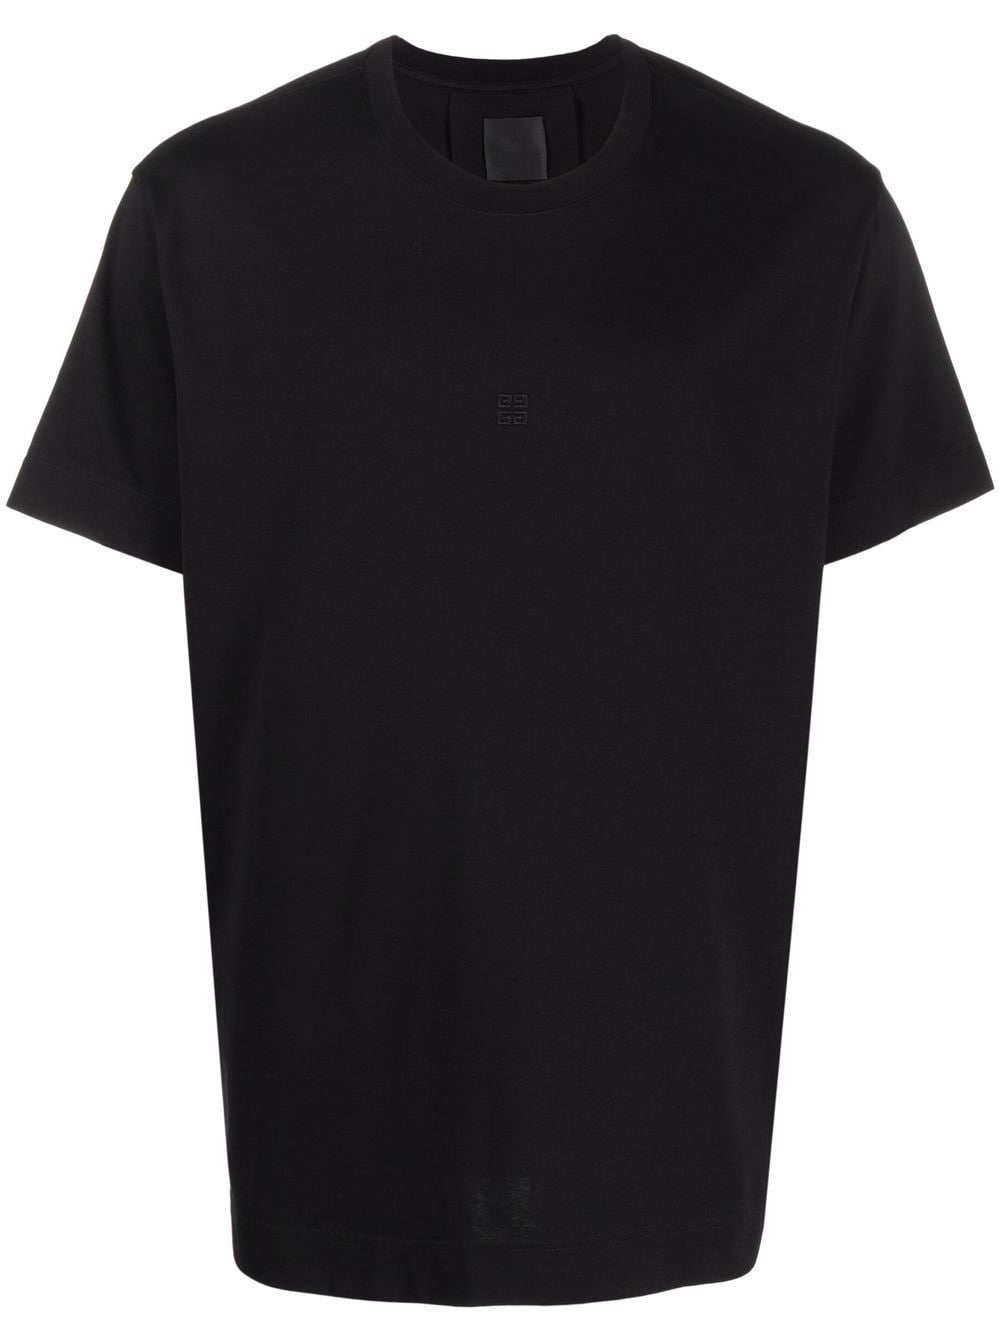 фото Givenchy футболка с вышивкой 4g